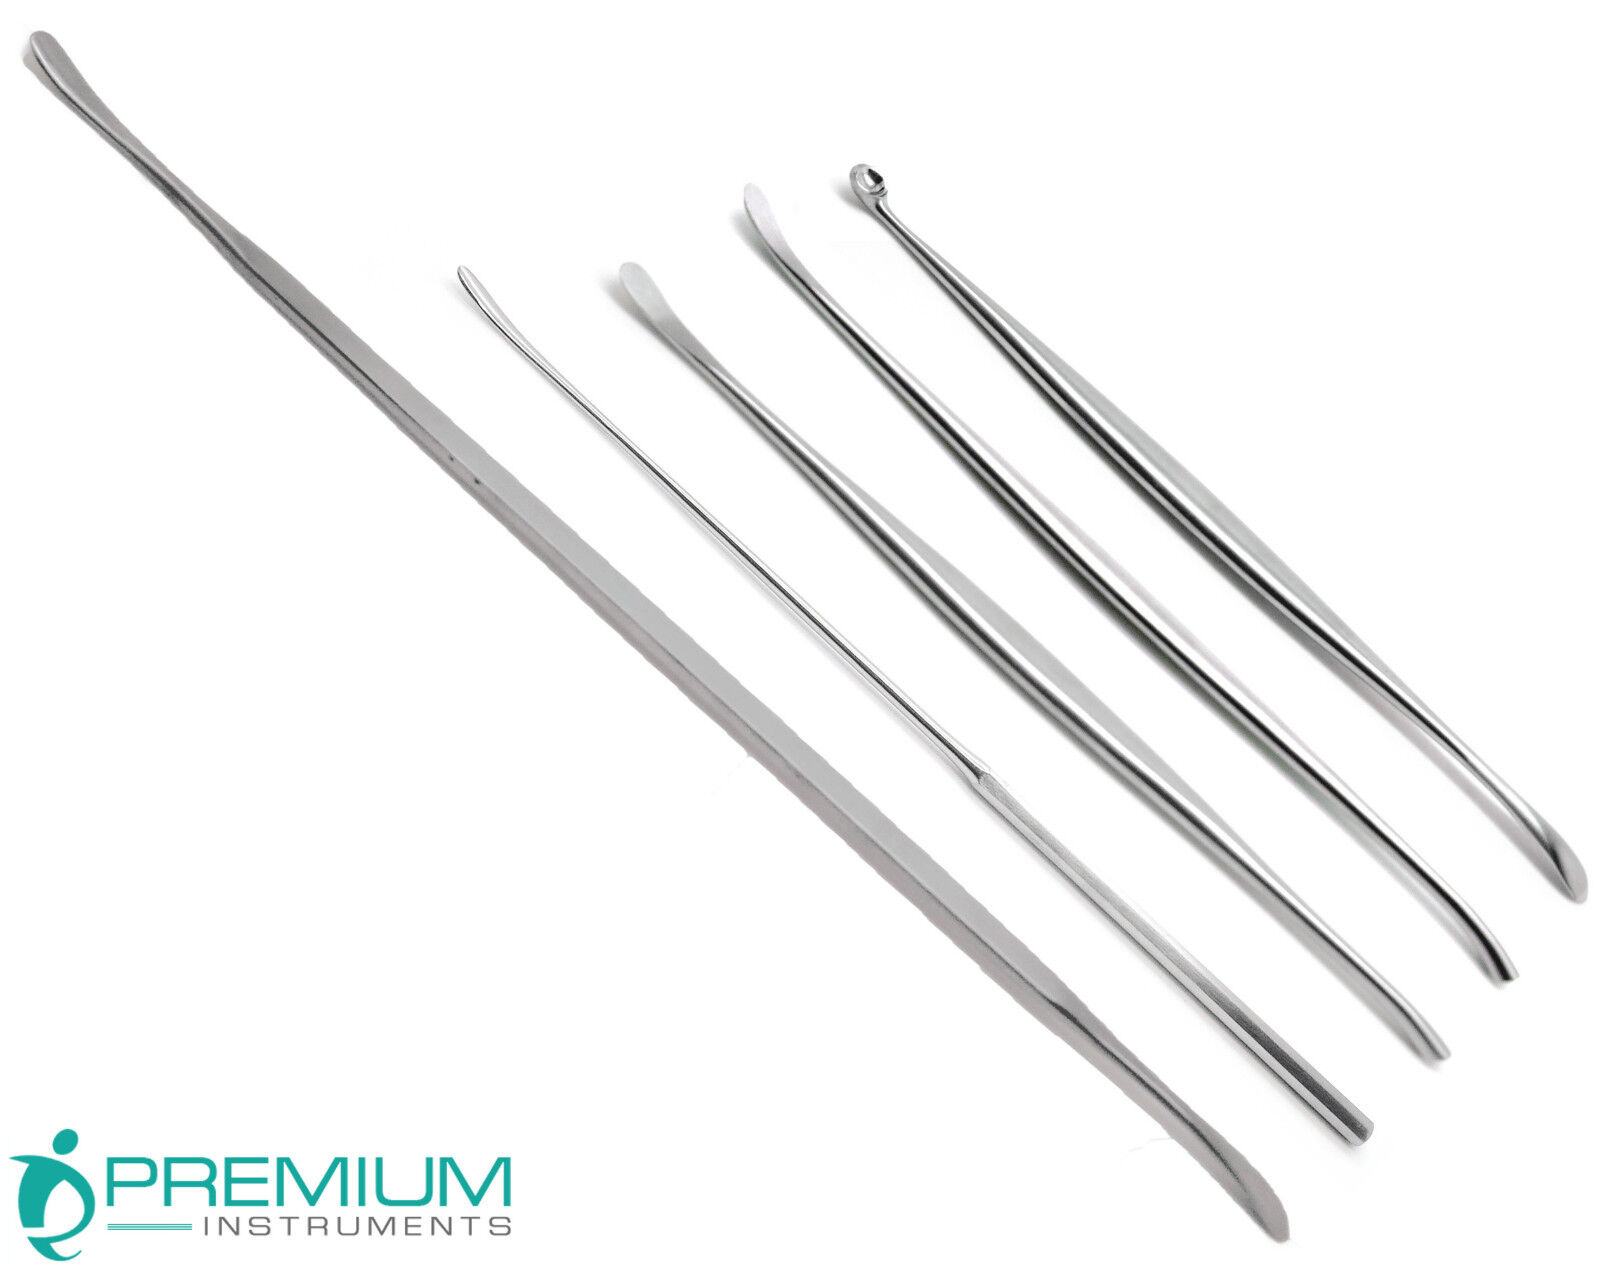 5 Pcs Set Penfield Dissectors No. 1, 2, 3, 4, 5 Neuro Surgical Spine Instruments